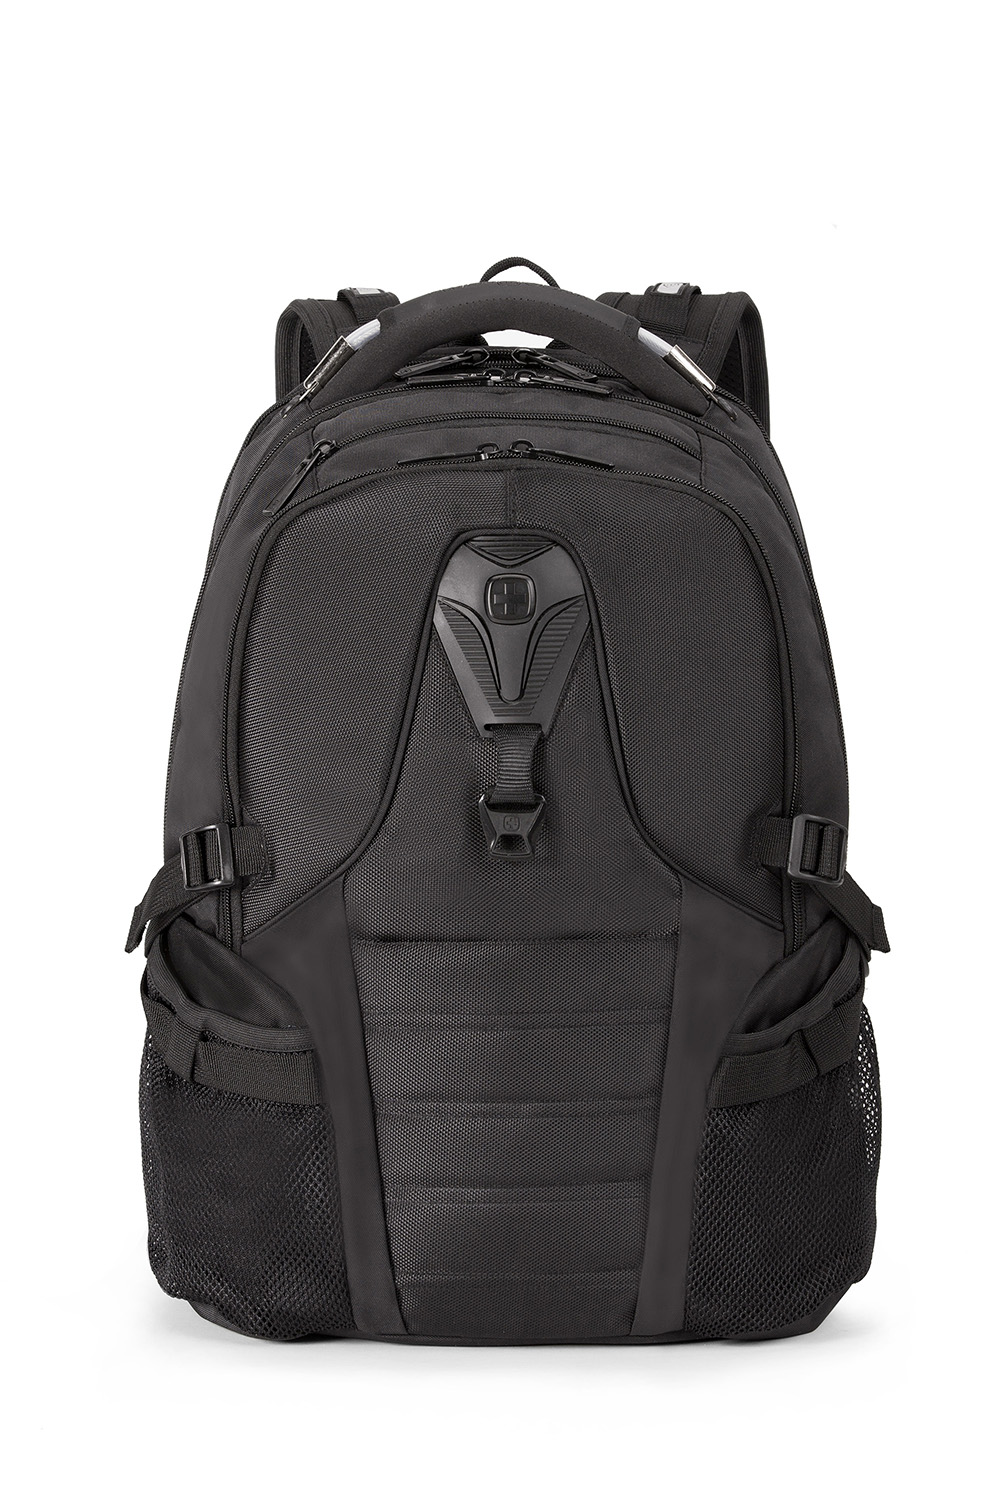 Swissgear 1186 backpack - Walmart.com